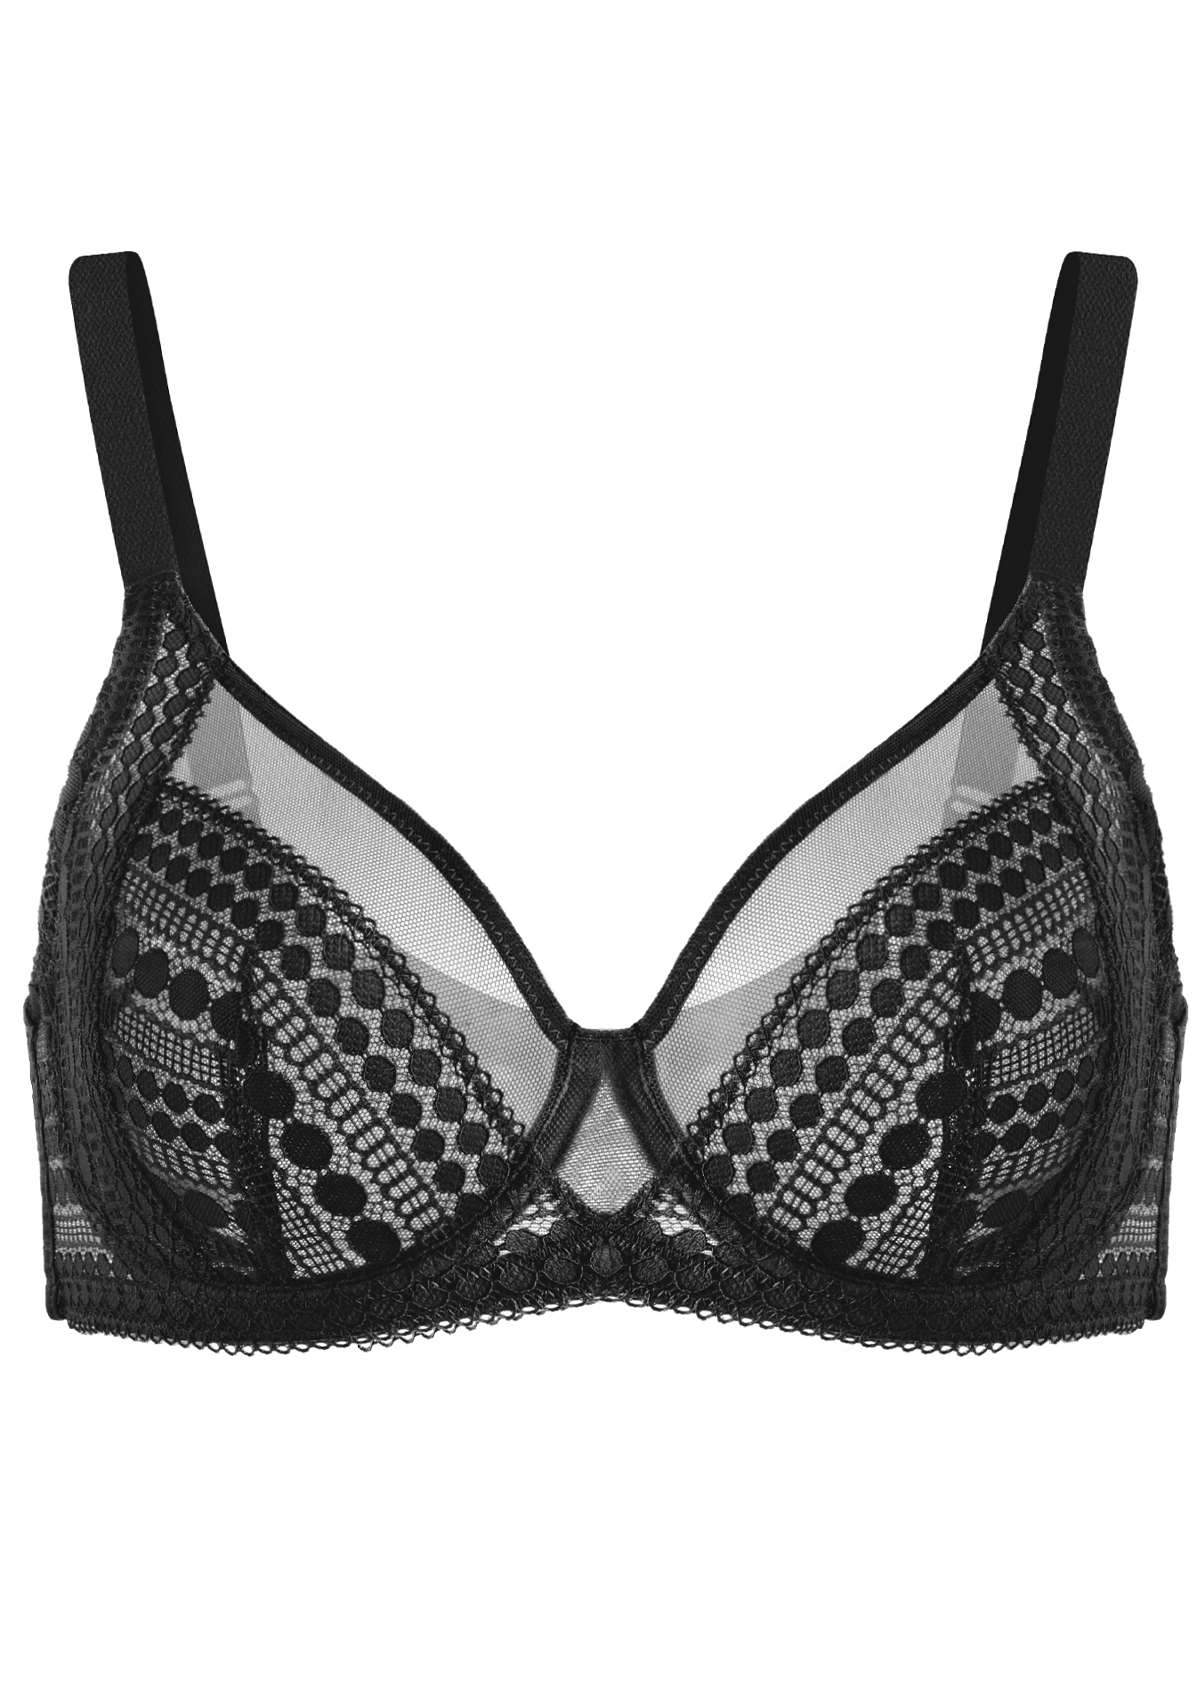 HSIA Heroine Matching Bra And Panties: Unlined Lace Unpadded Bra - Black / 44 / DD/E